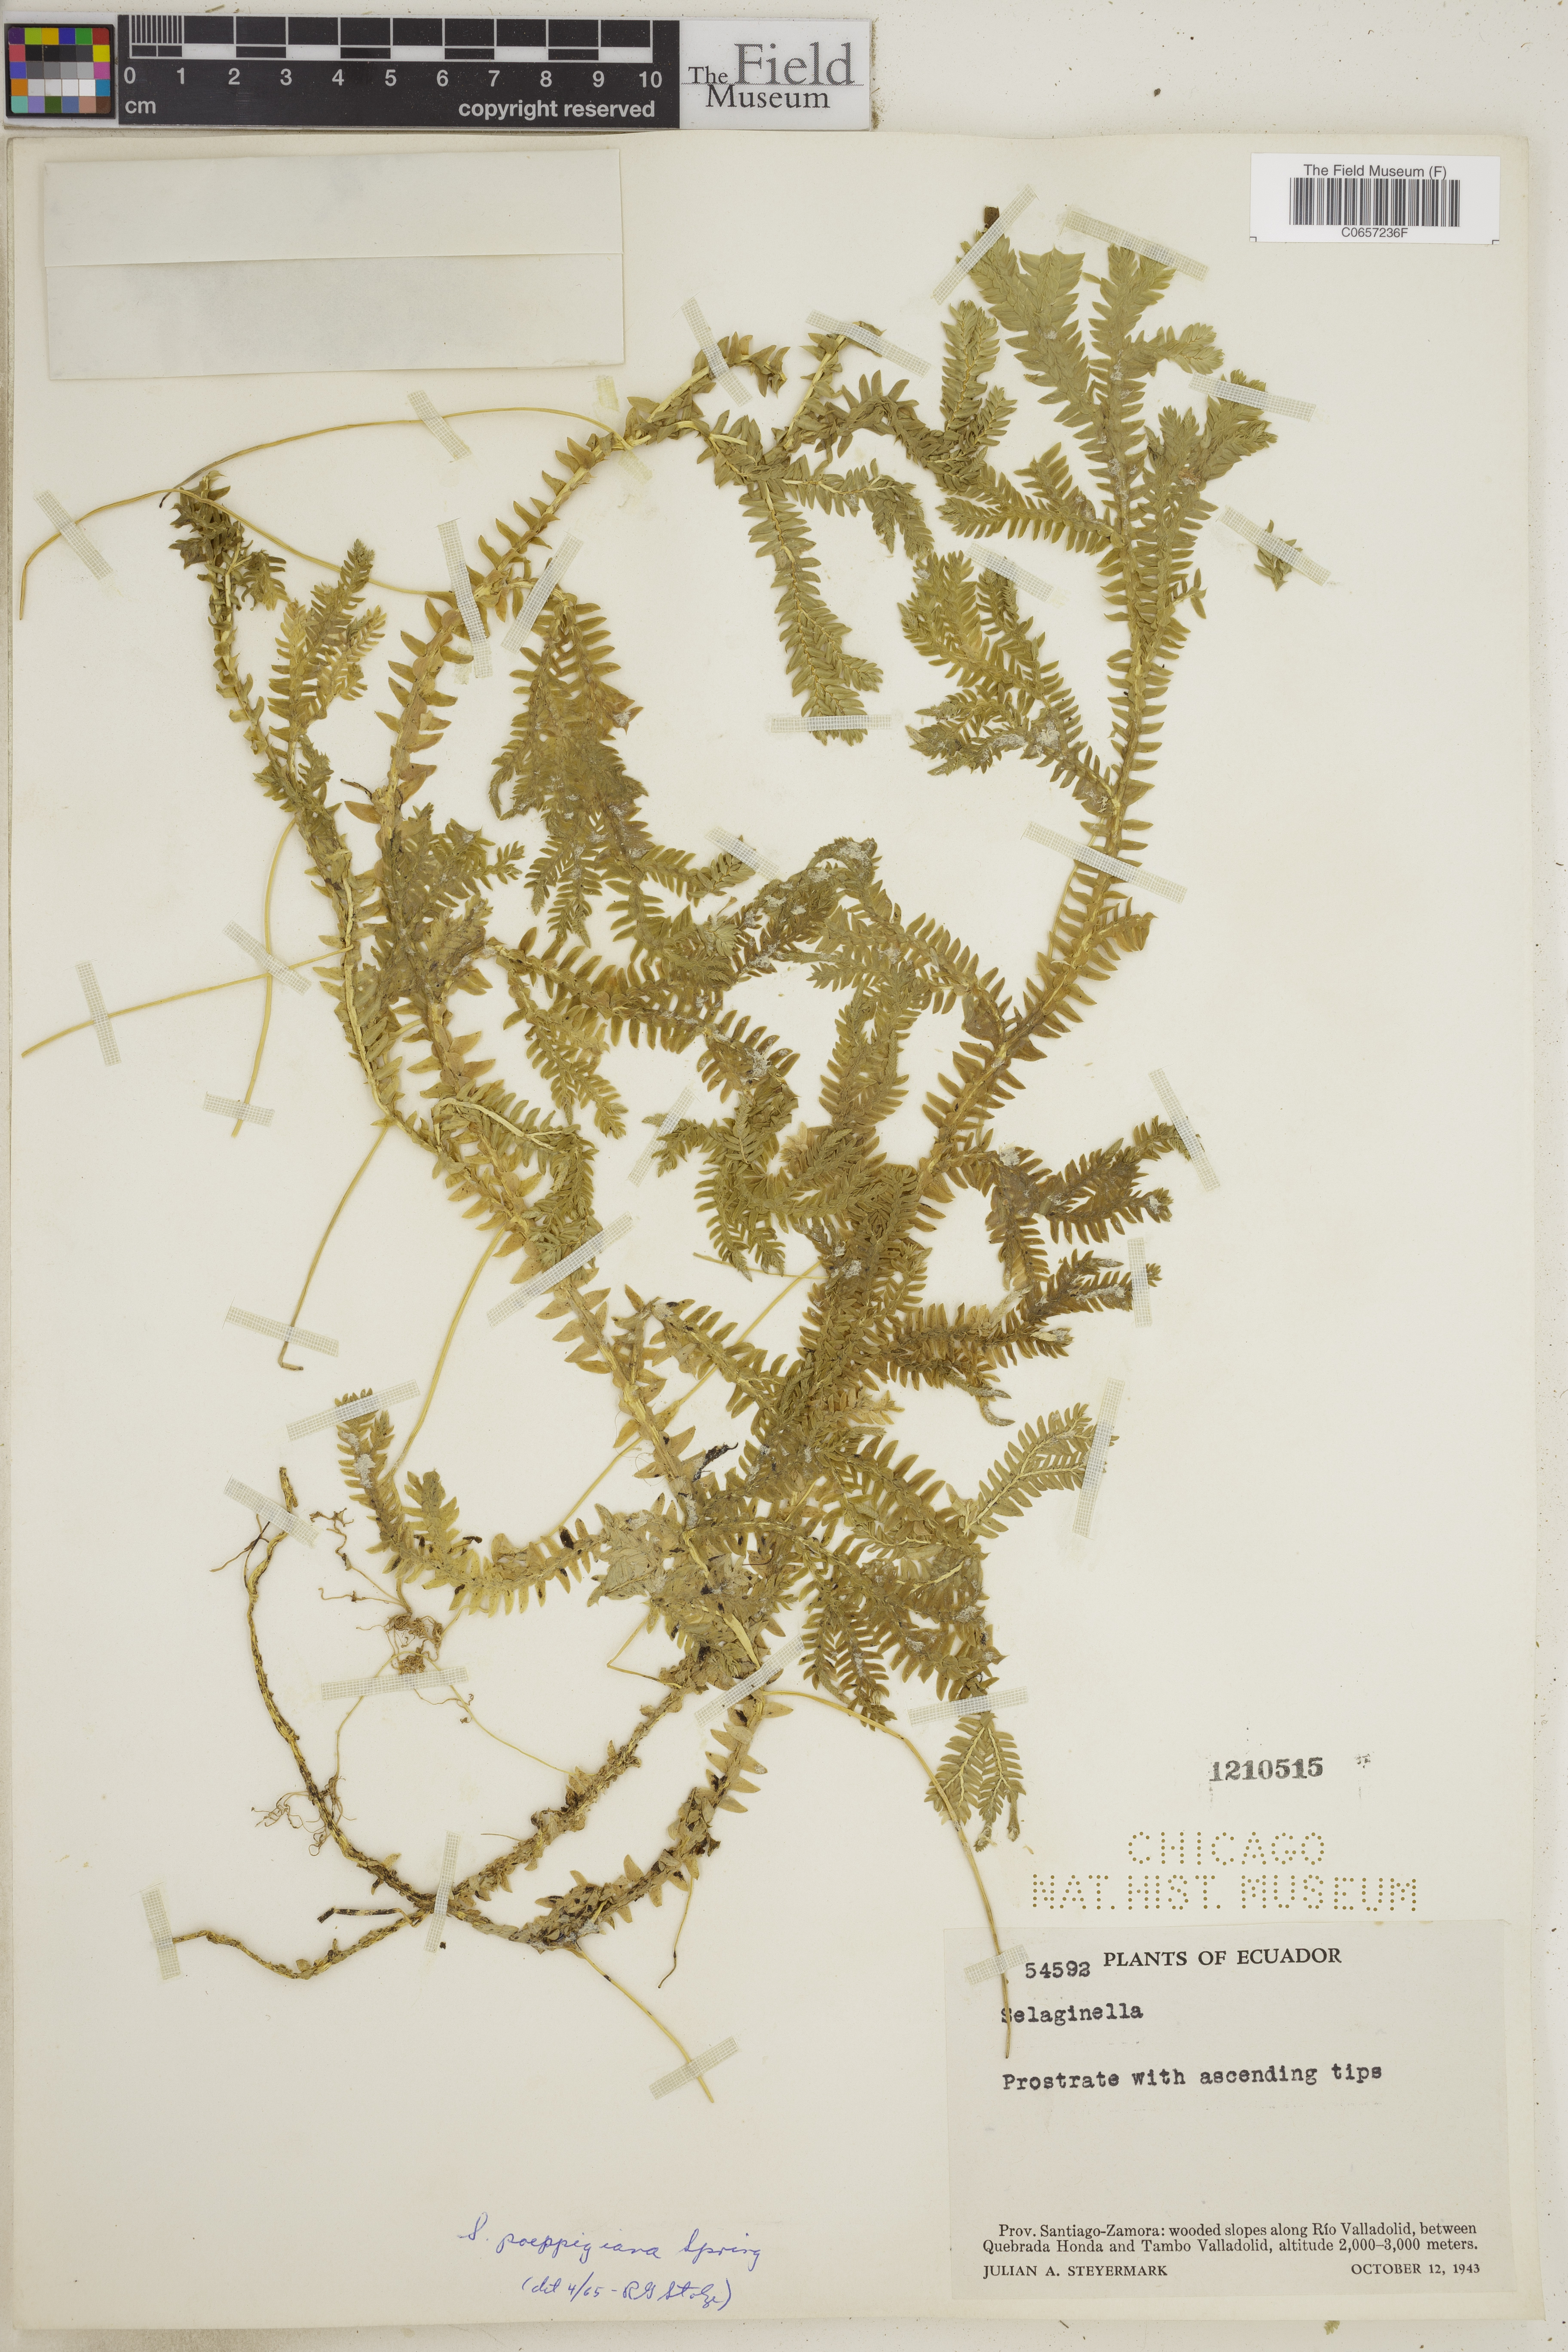 Selaginella poeppigiana image